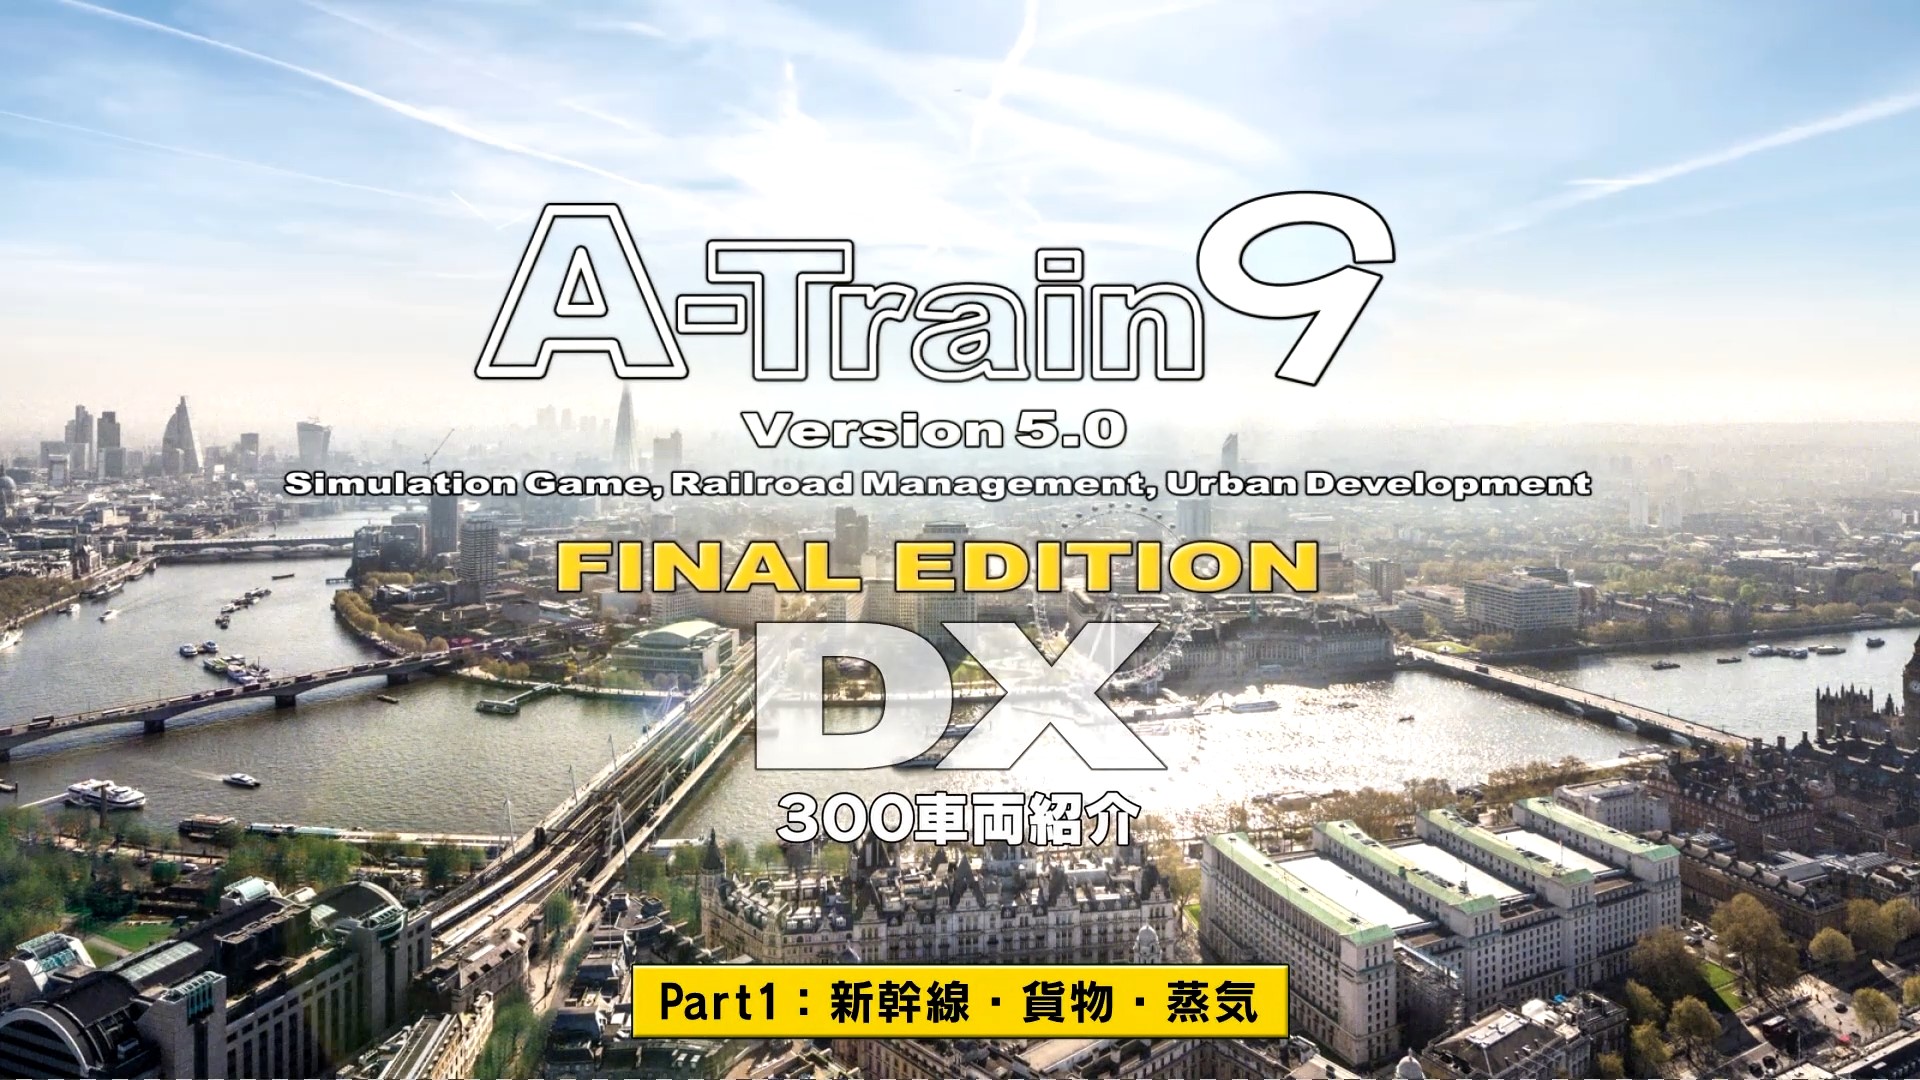 「A列車で行こう9 Version5.0 コンプリートパックDX」の“300車両 